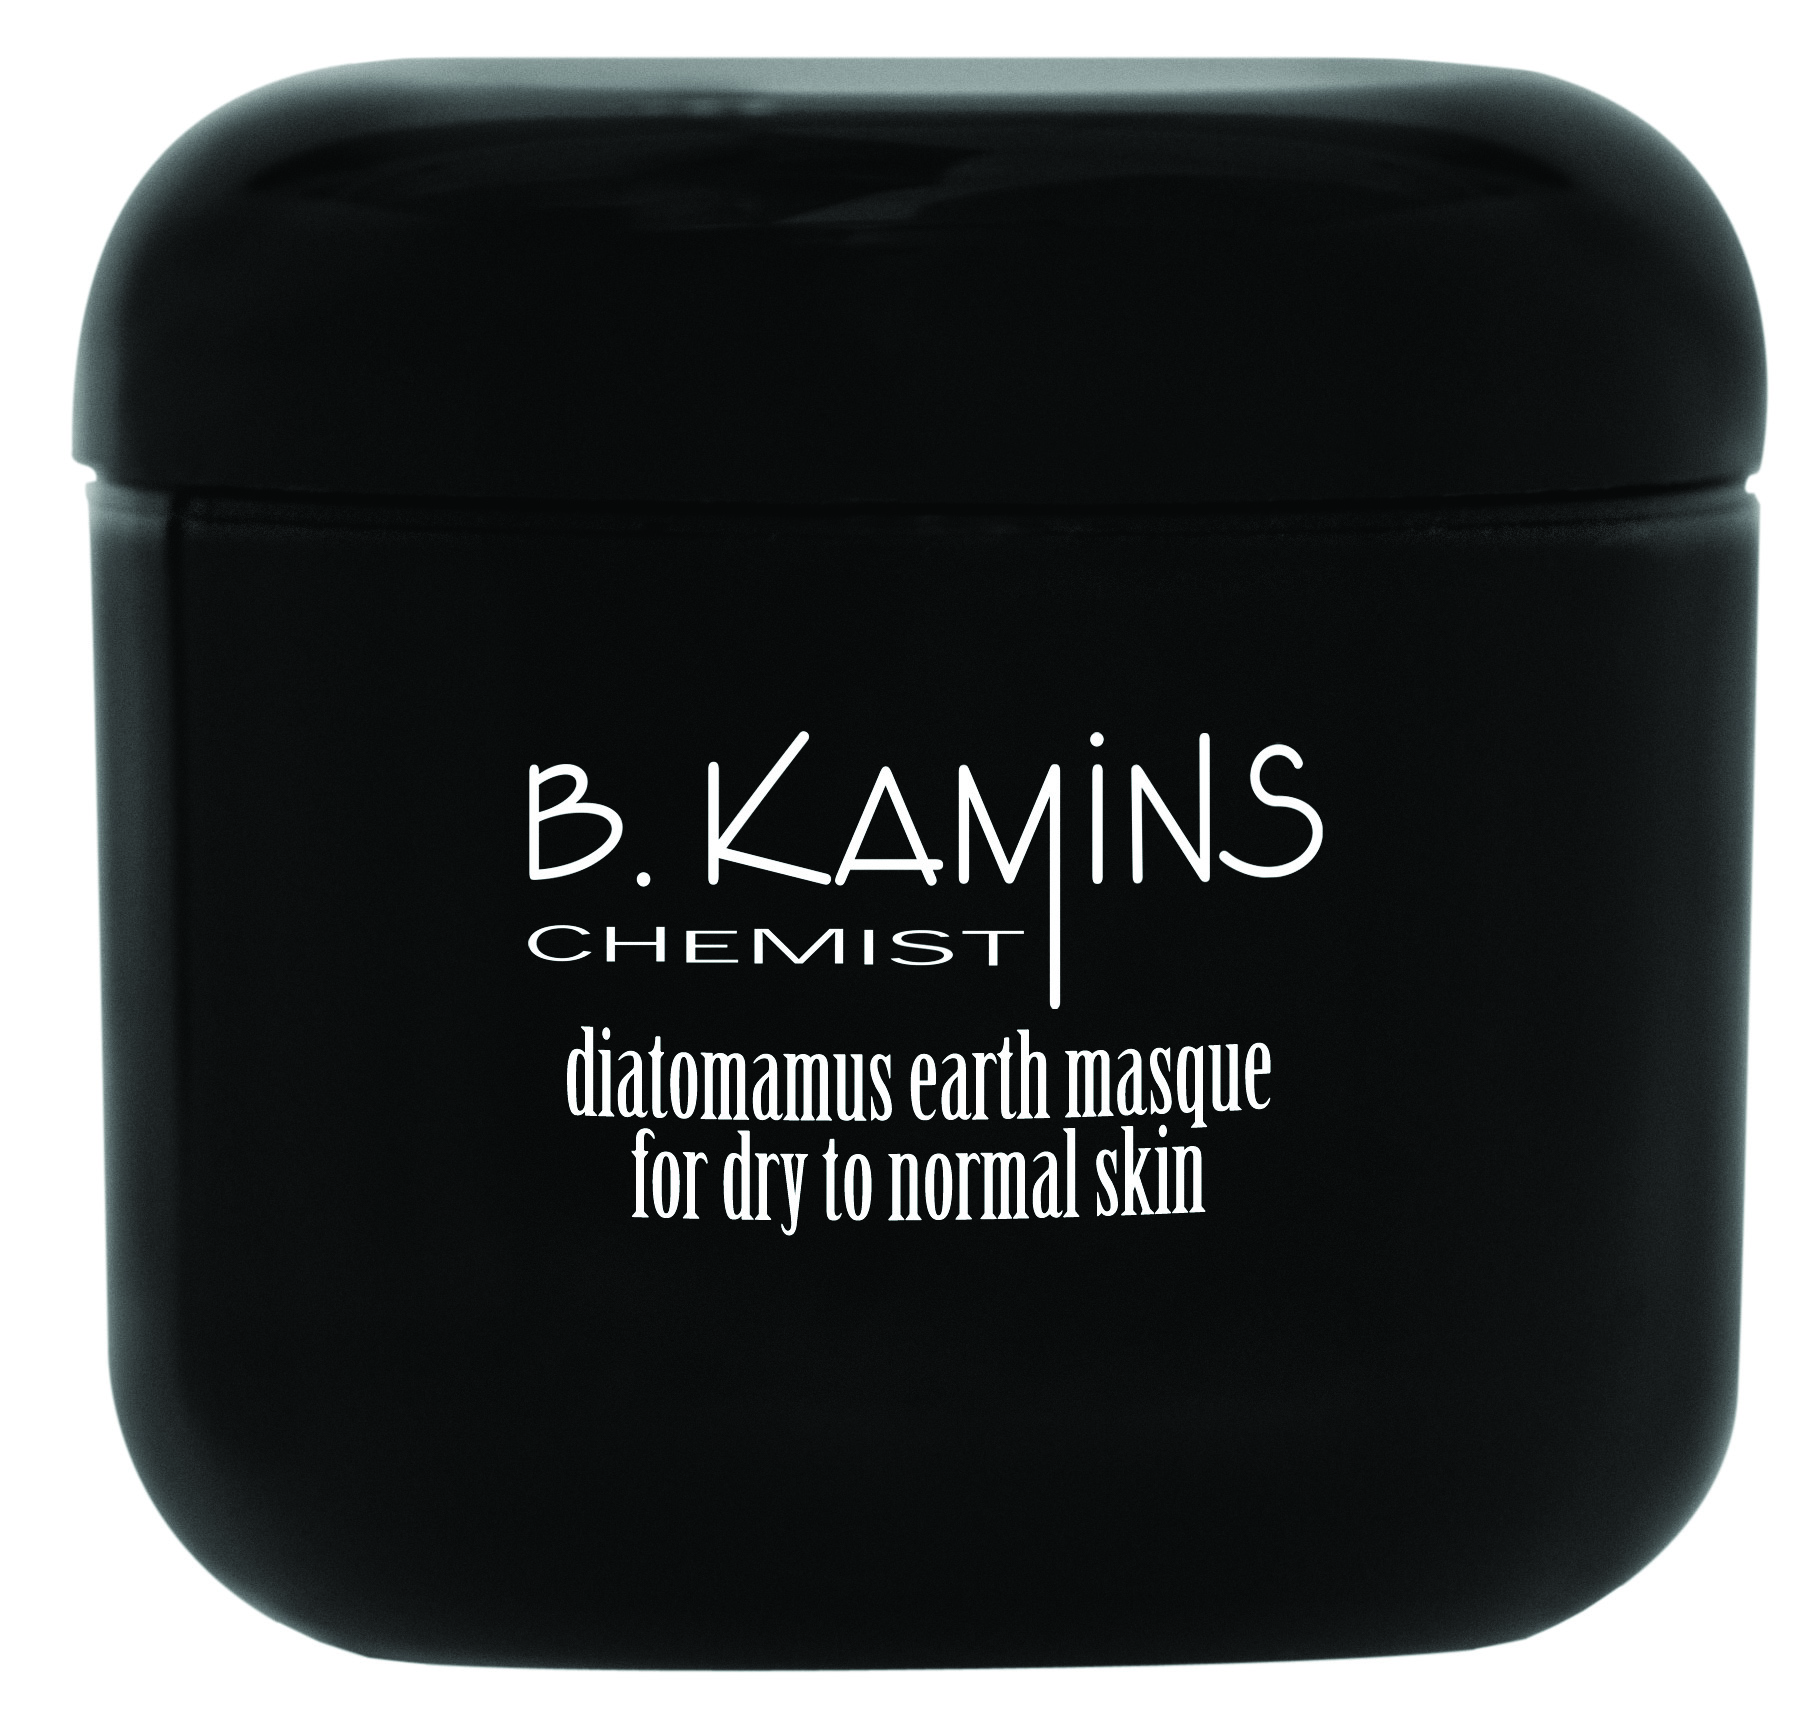 B Kamins B. Kamins Diatomamus Earth Masque Dry to Normal Skin